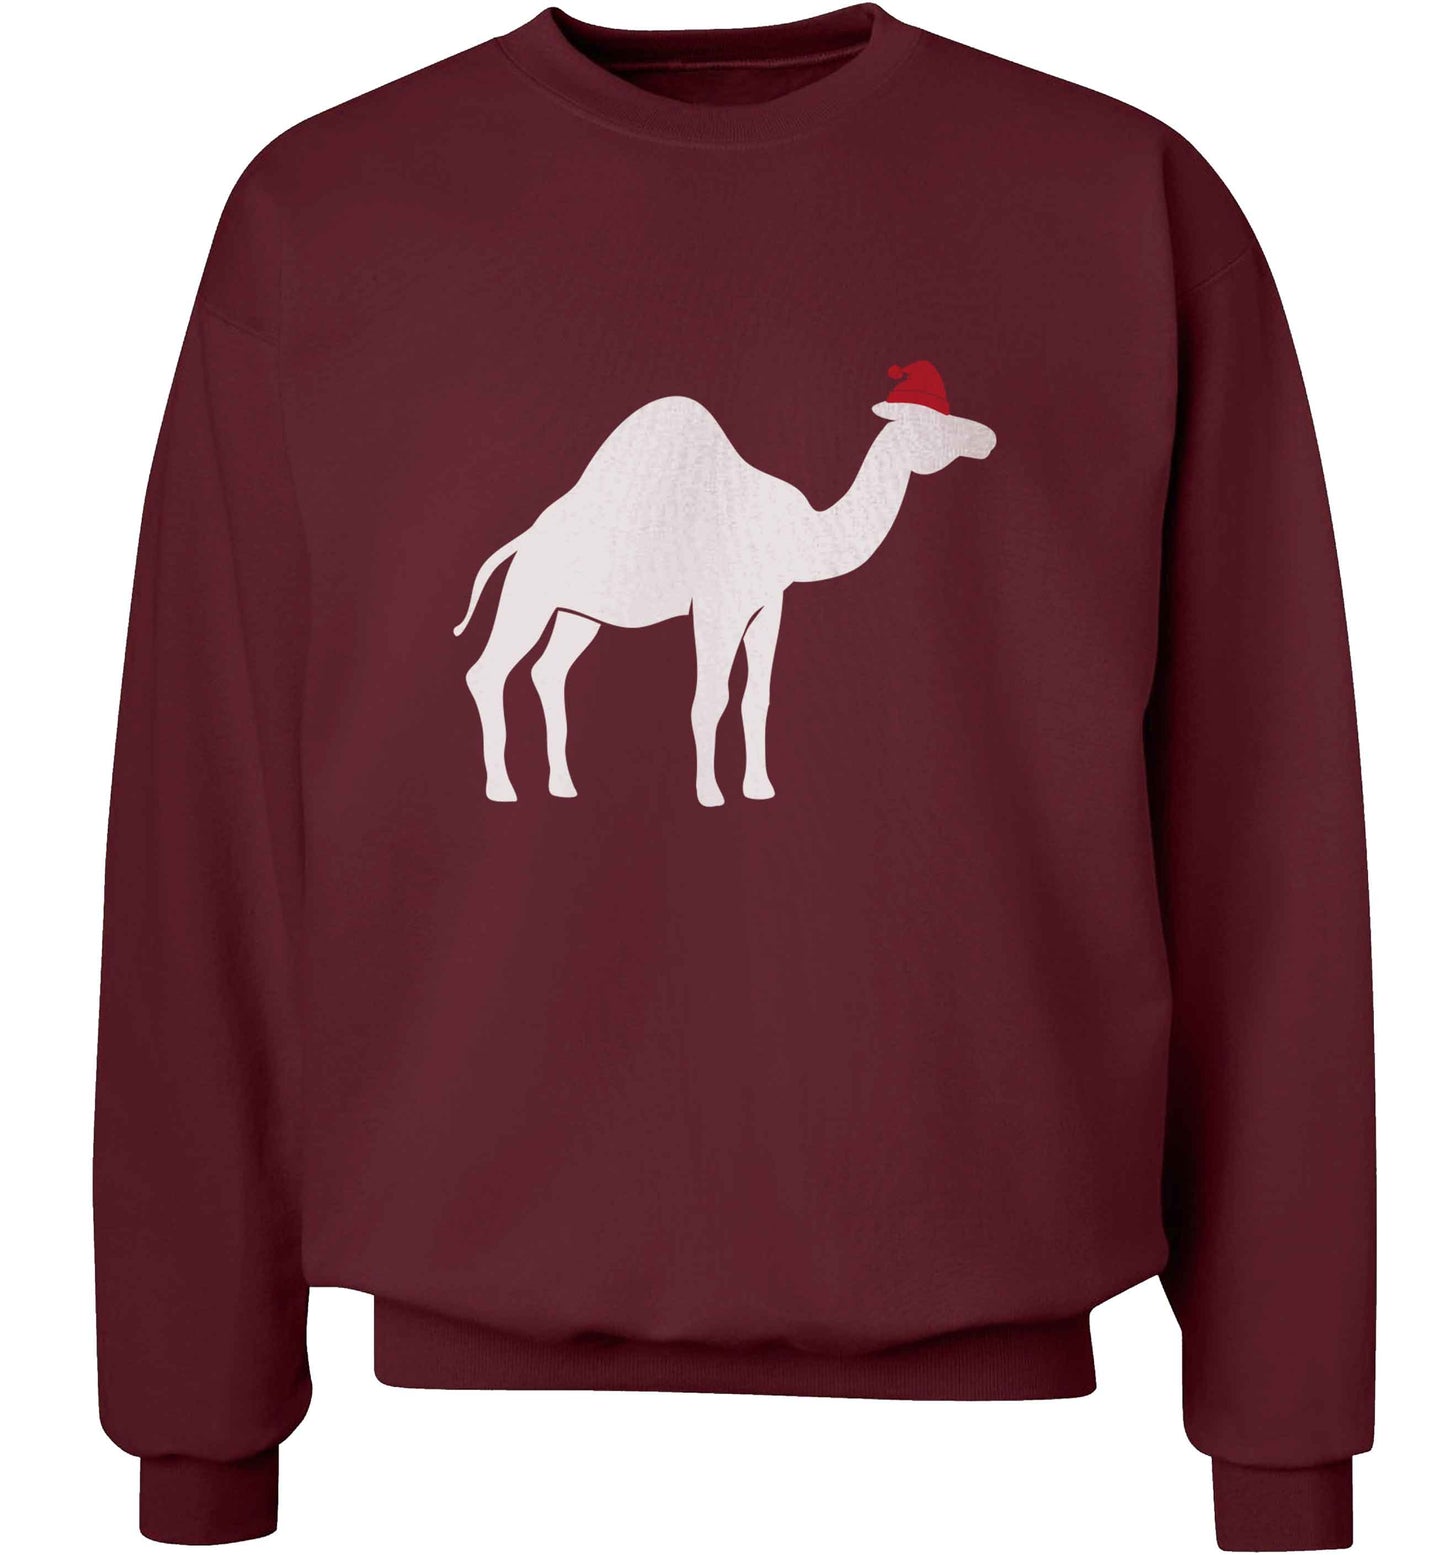 Blue camel santa adult's unisex maroon sweater 2XL